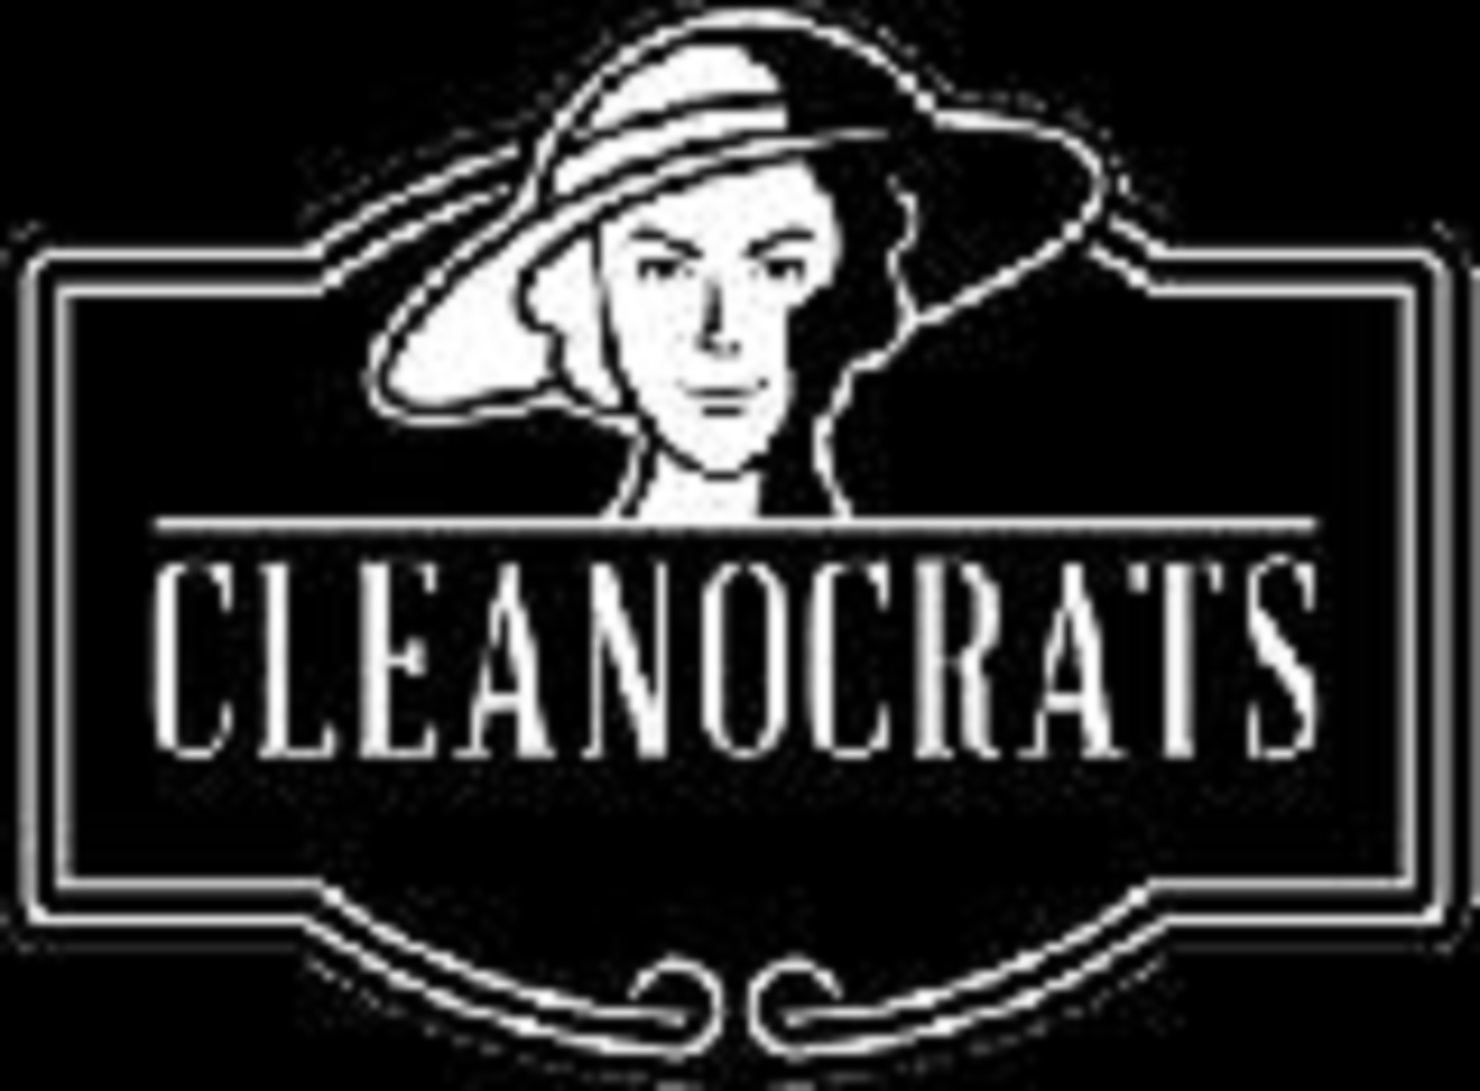 Cleanocrats's Logo